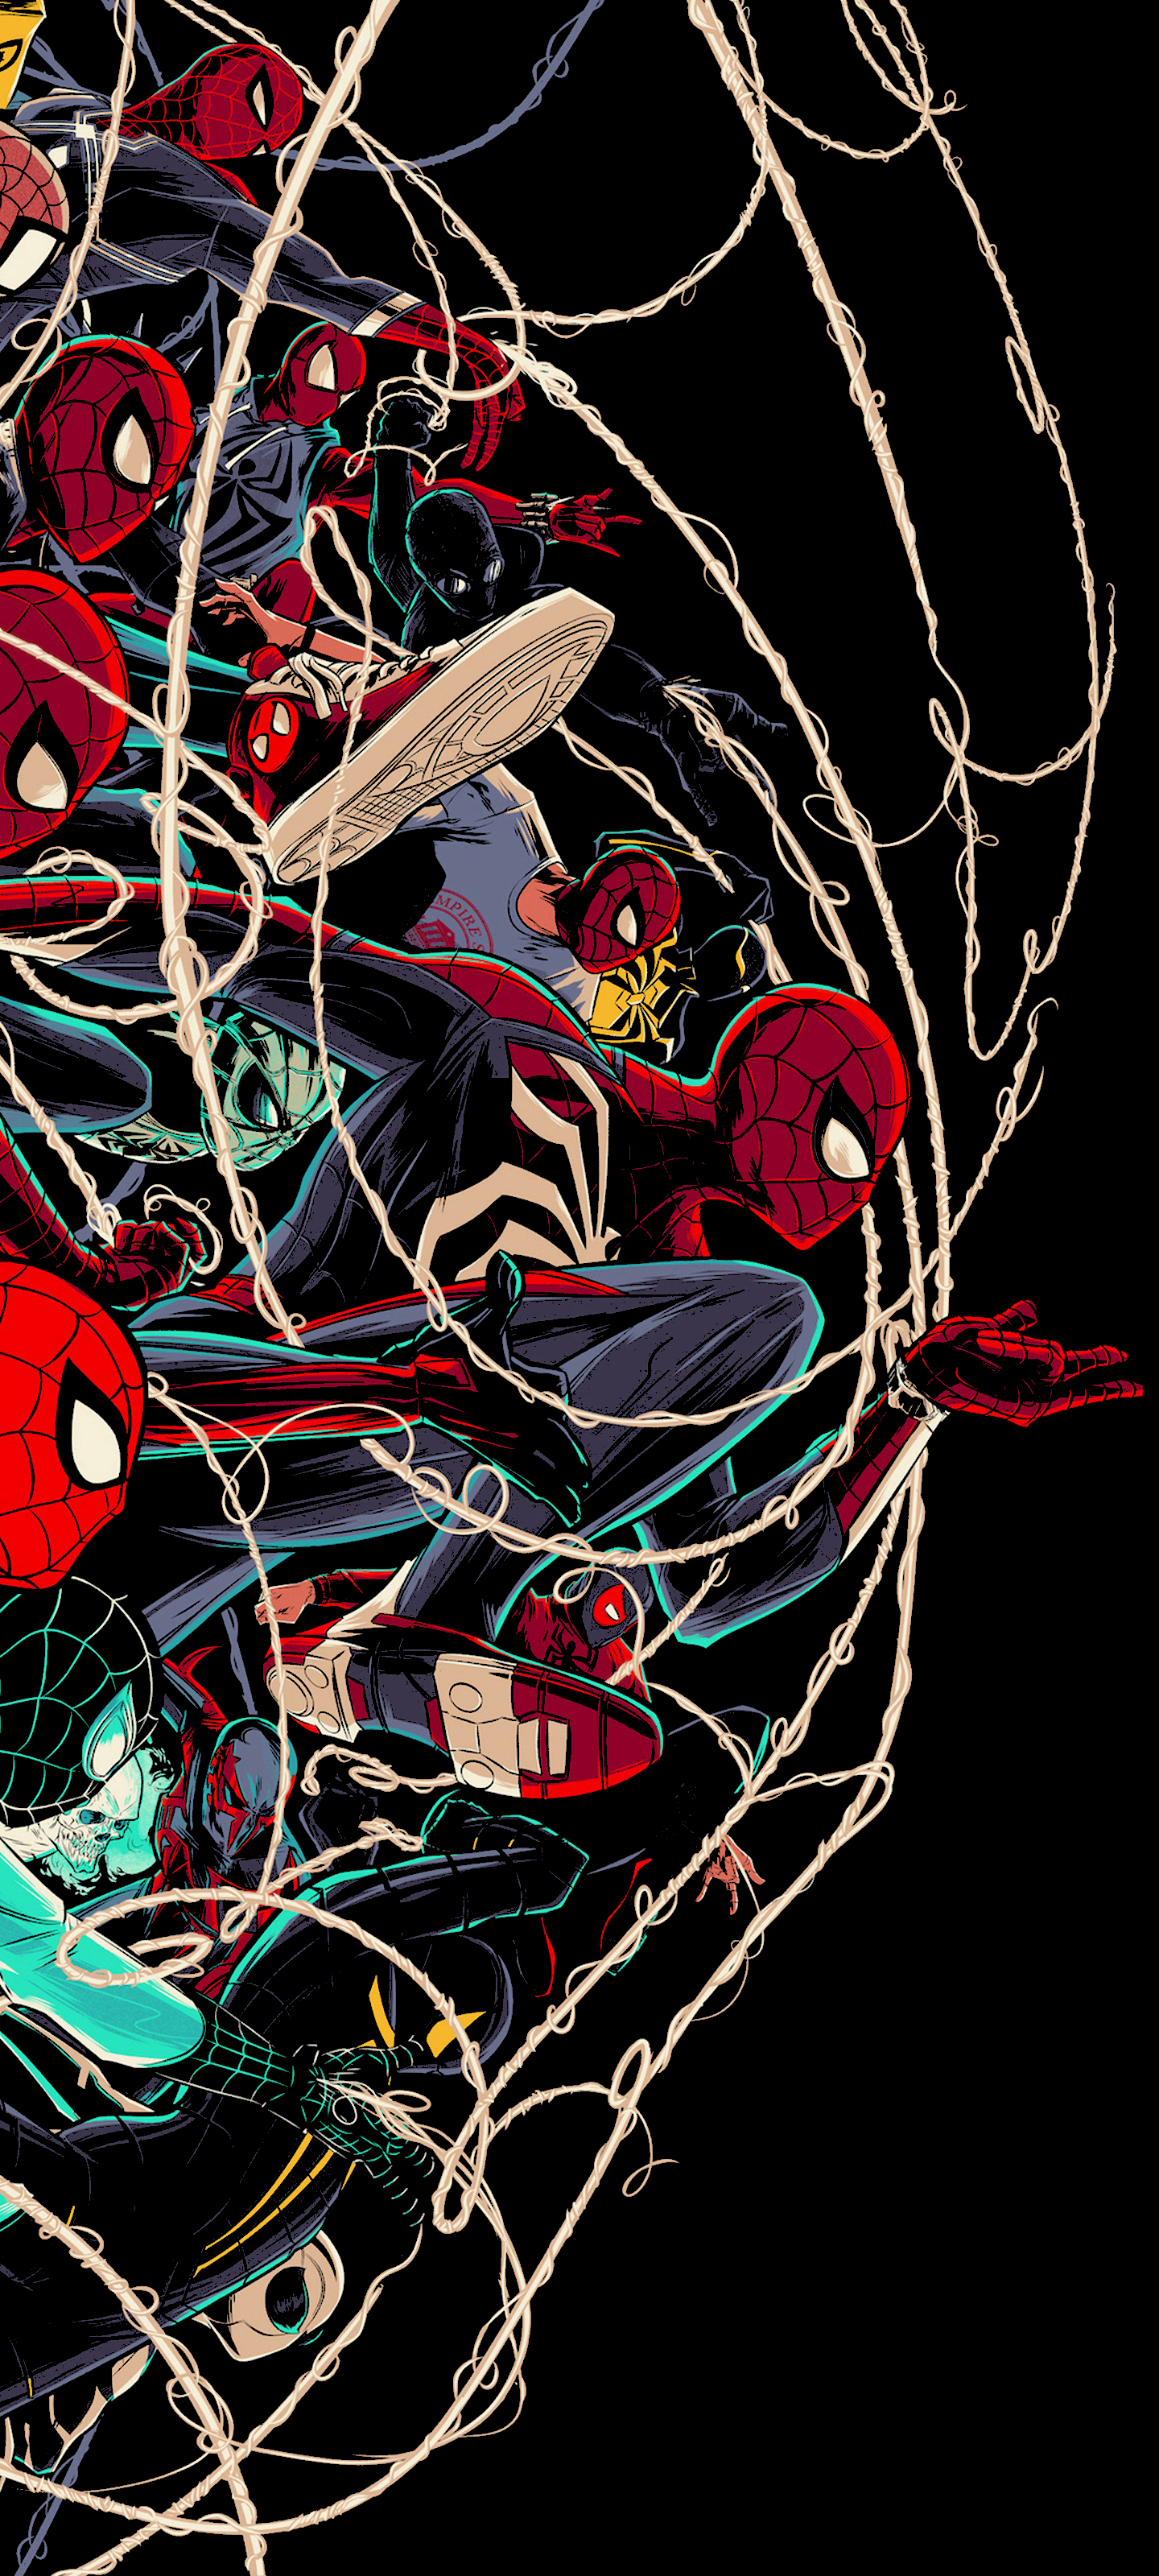 Superior Spiderman Wallpaper HD 74 images